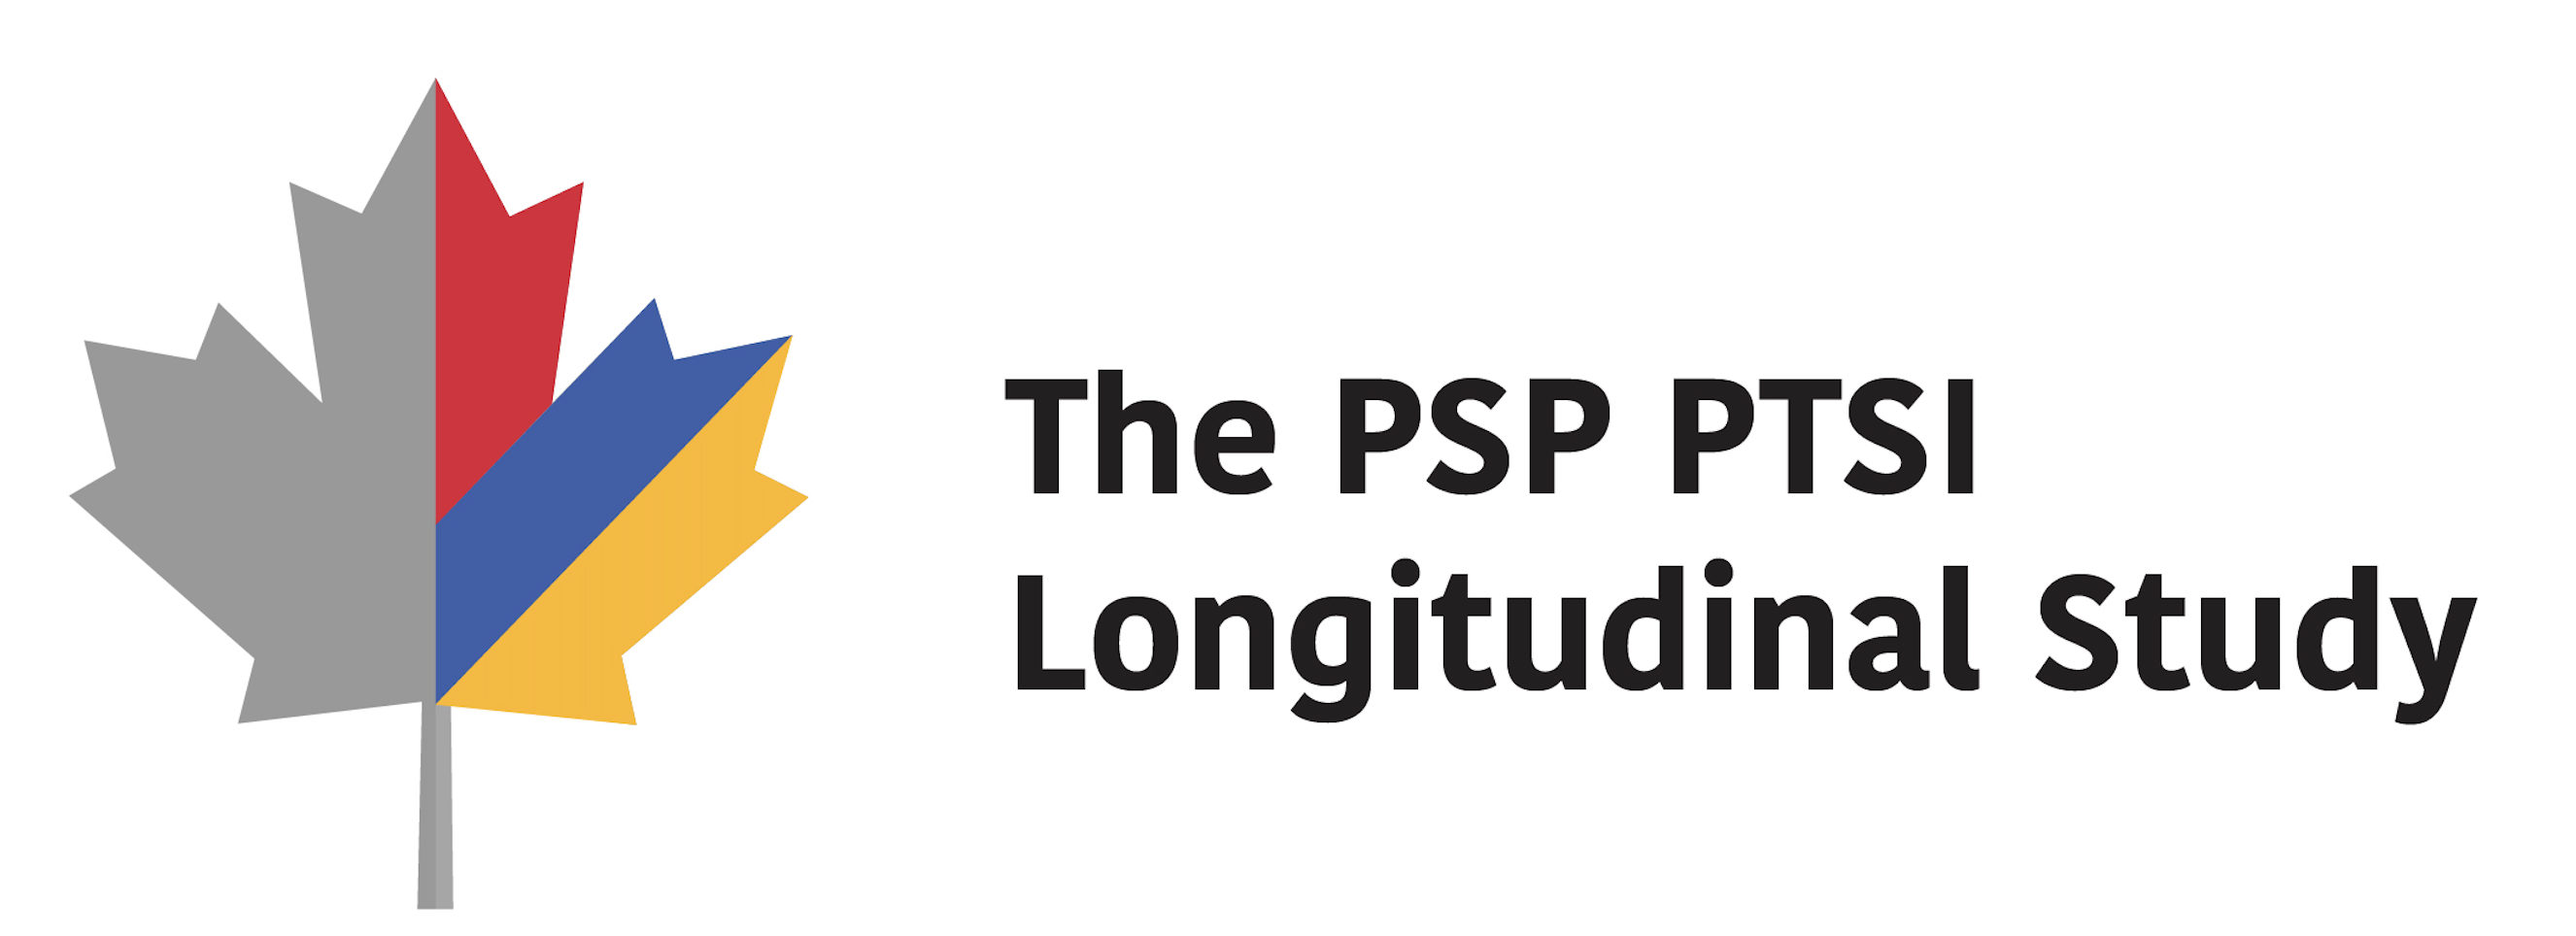 PSP PTSI Study